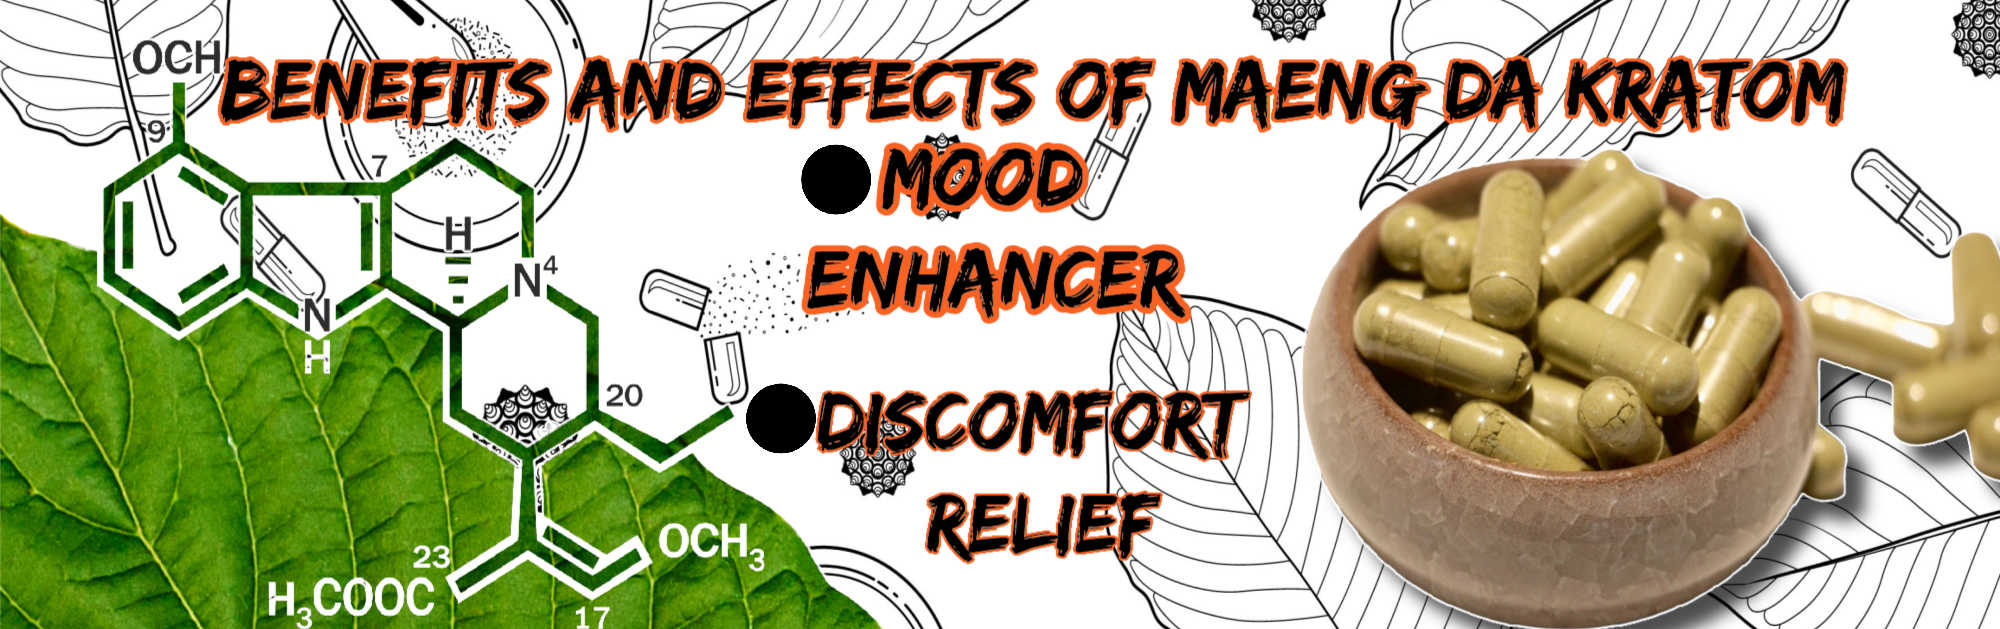 image of maeng da kratom benefits and effects